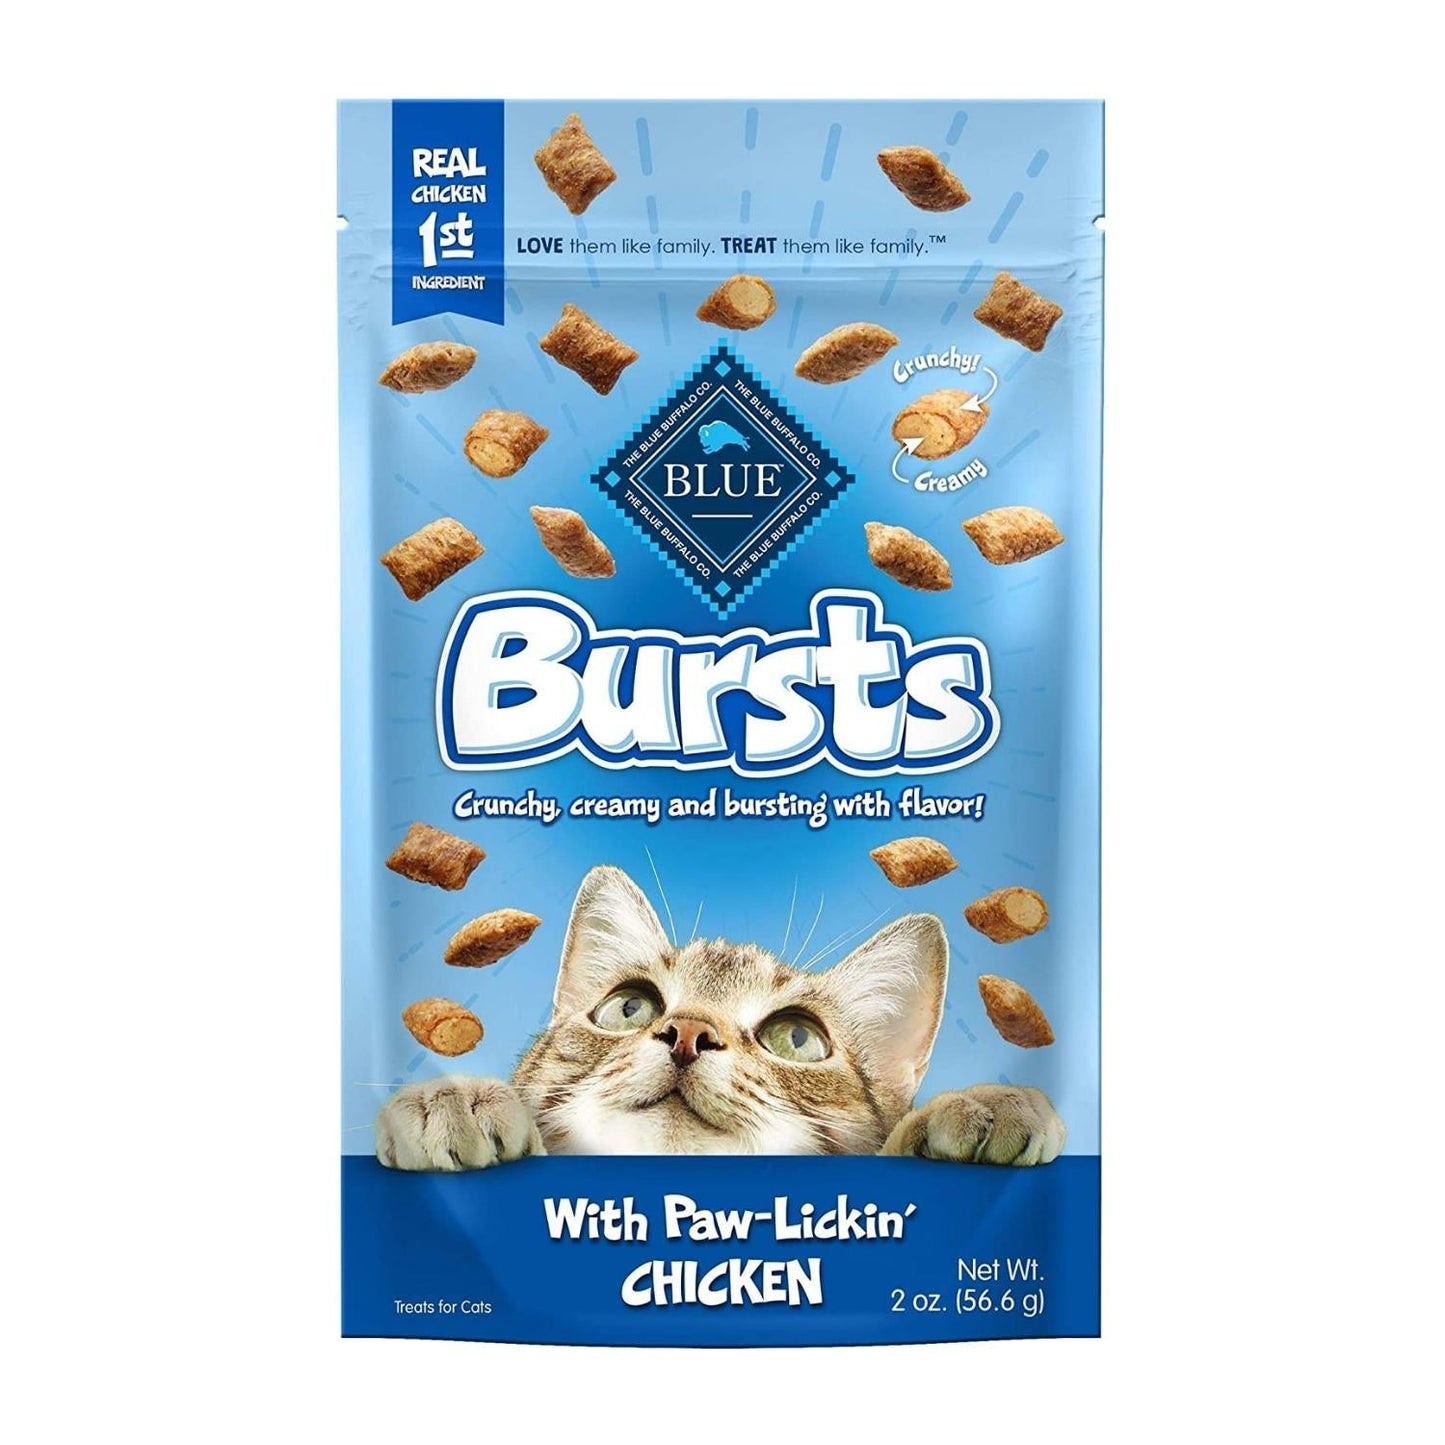 **Blue Buffalo Bursts Chicken 2oz. (Case of 6)